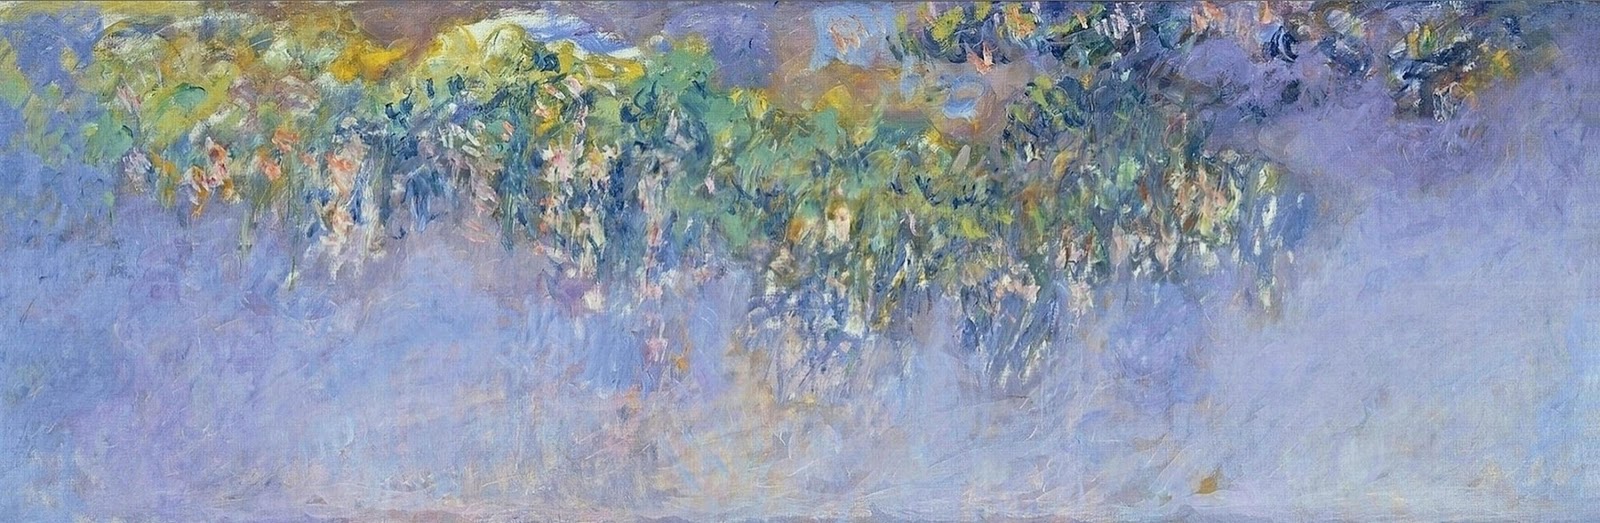 Claude+Monet-1840-1926 (227).jpg